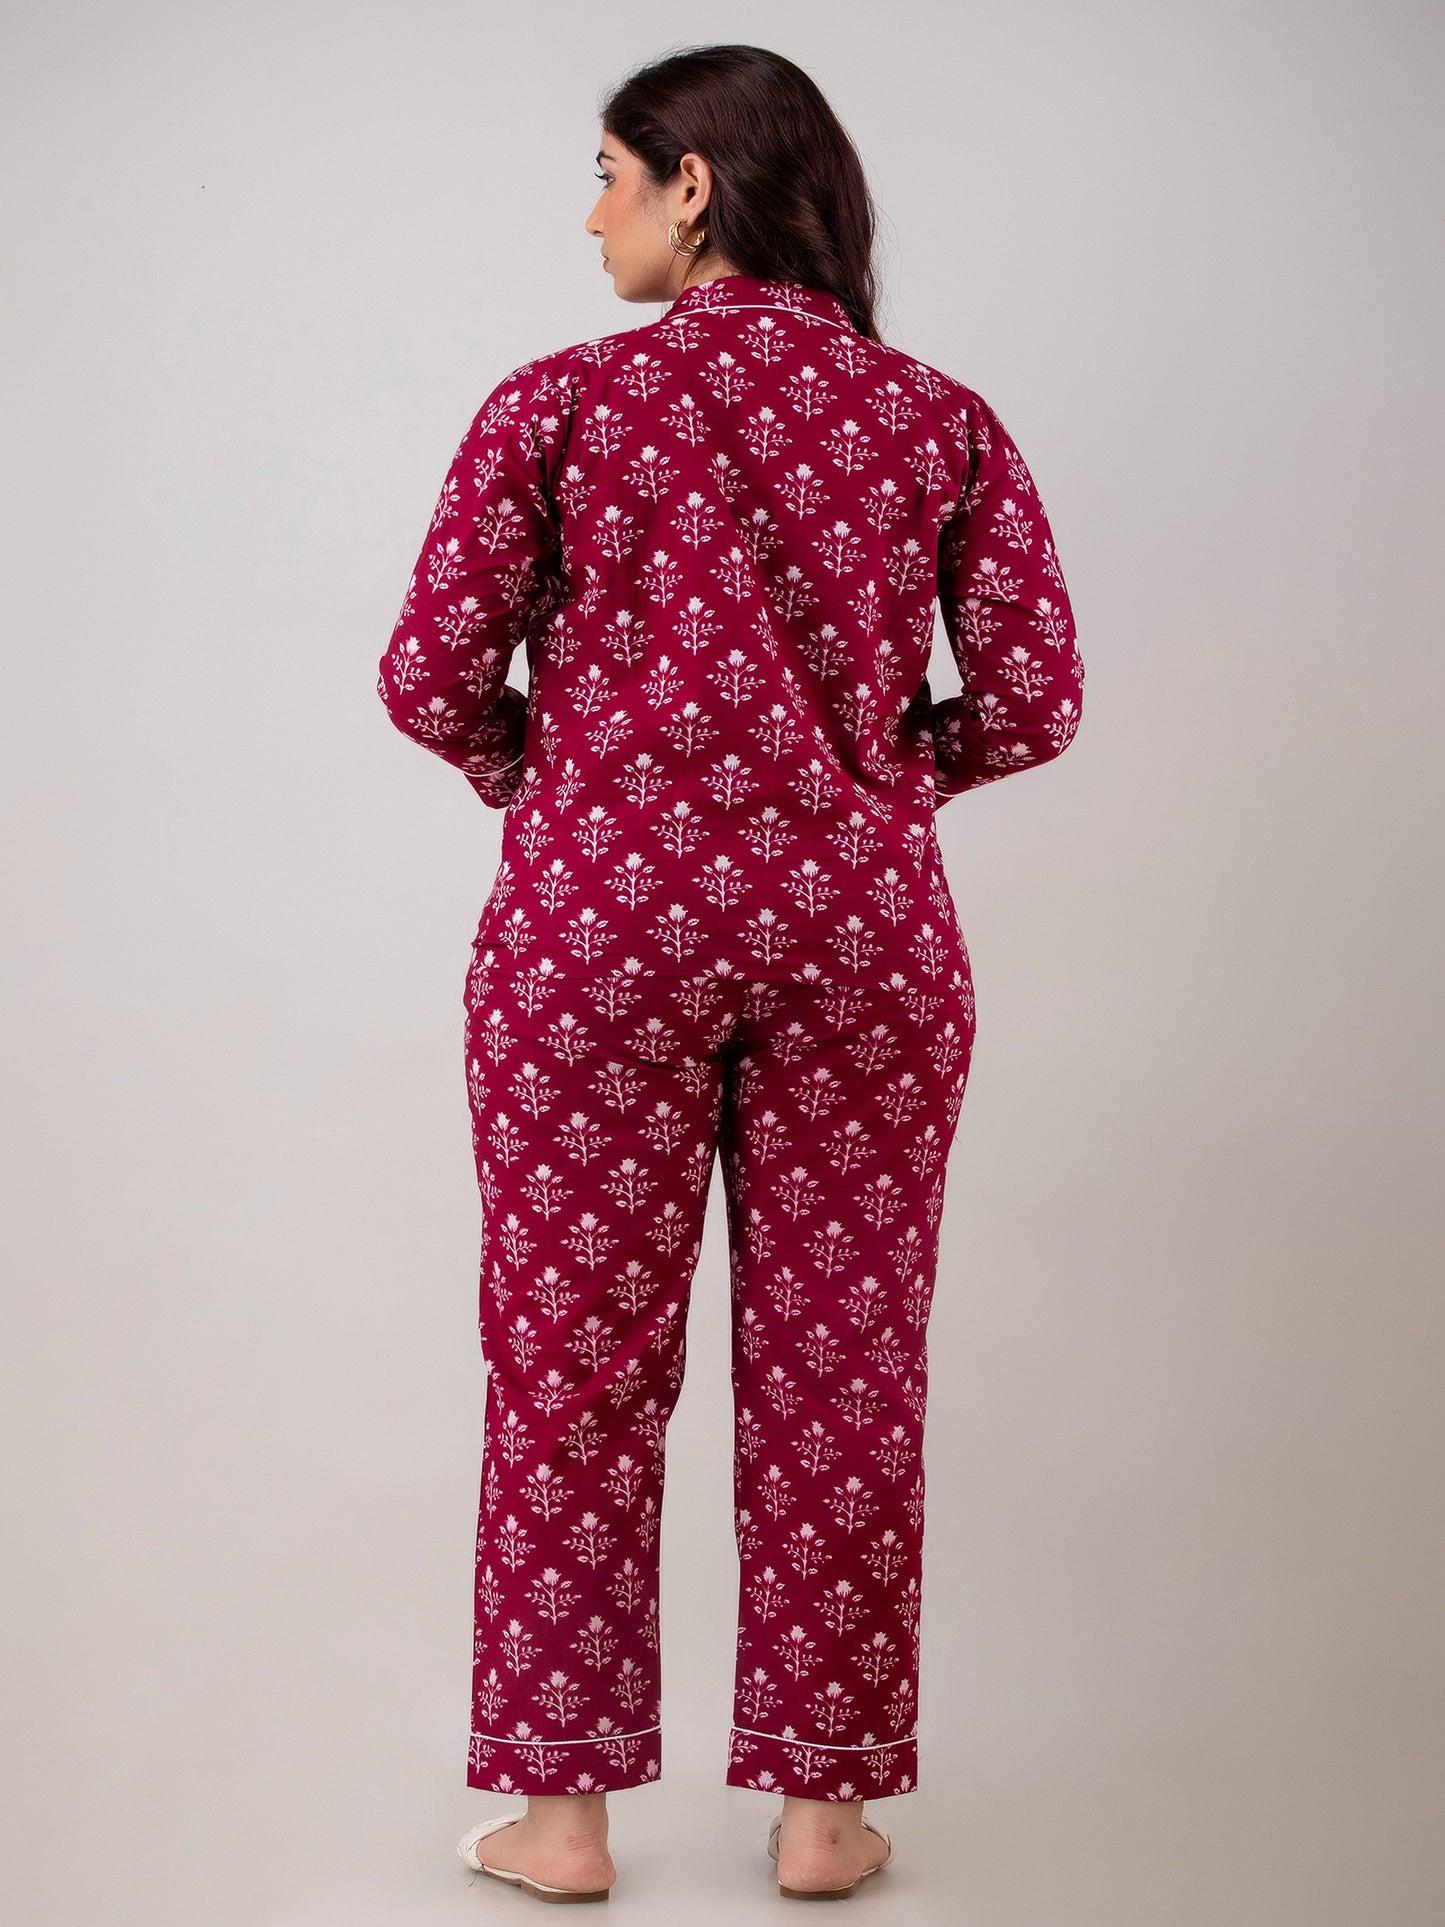 Purple Floral Print Pyjamas & Shirt Night suit with Patch Pocket